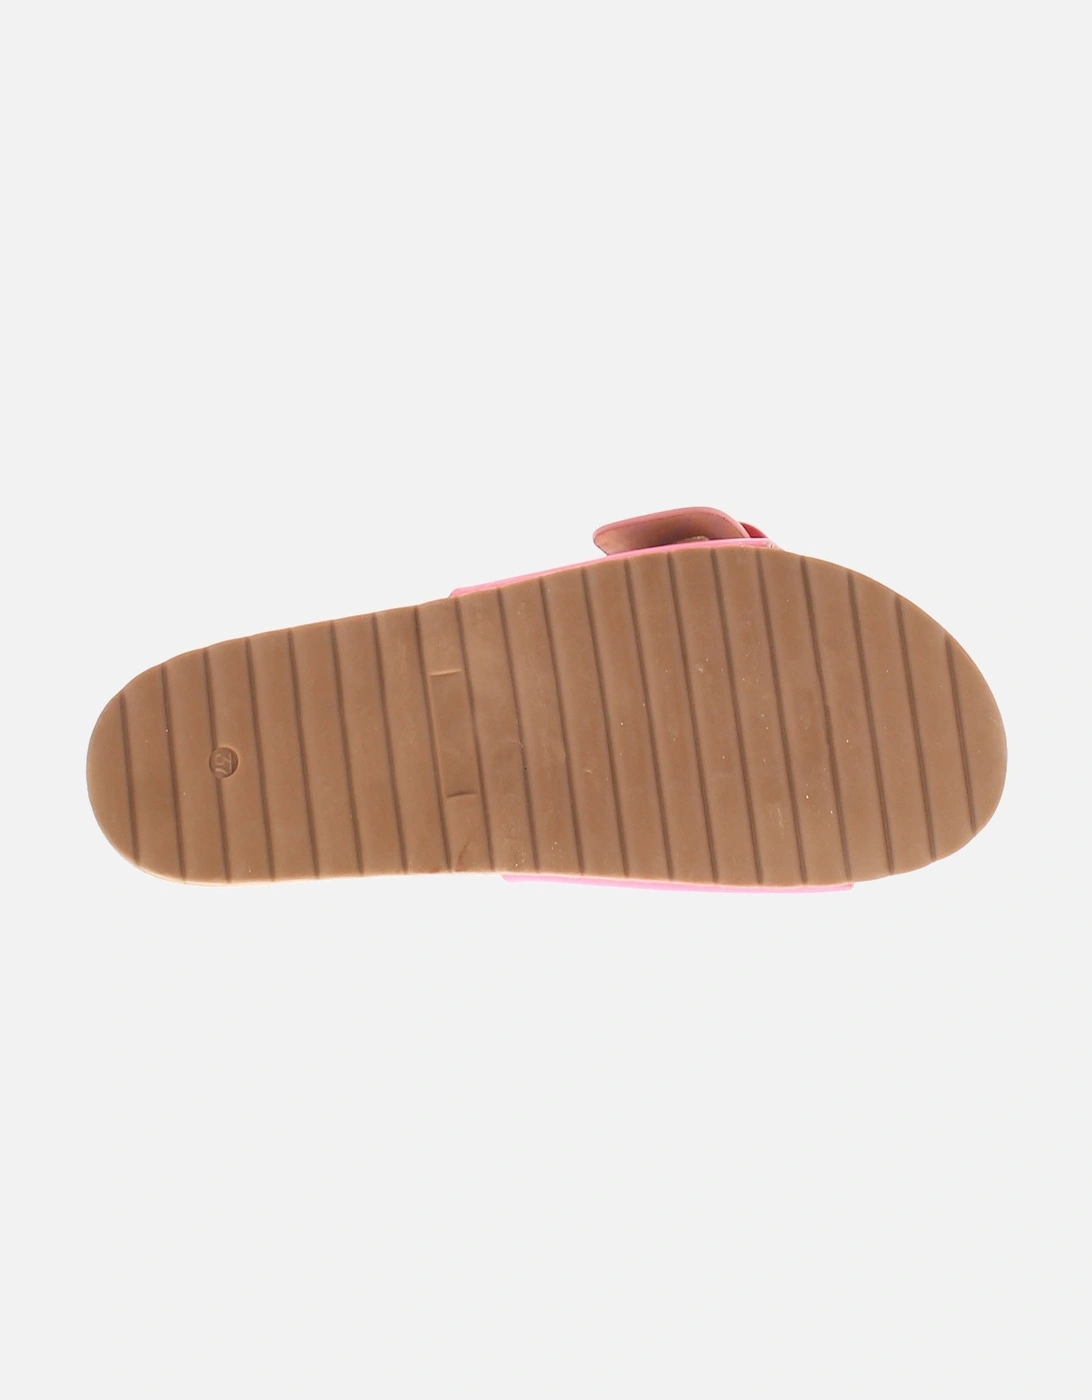 Womens Flat Sandals Mules Bloom Slip On pink UK Size